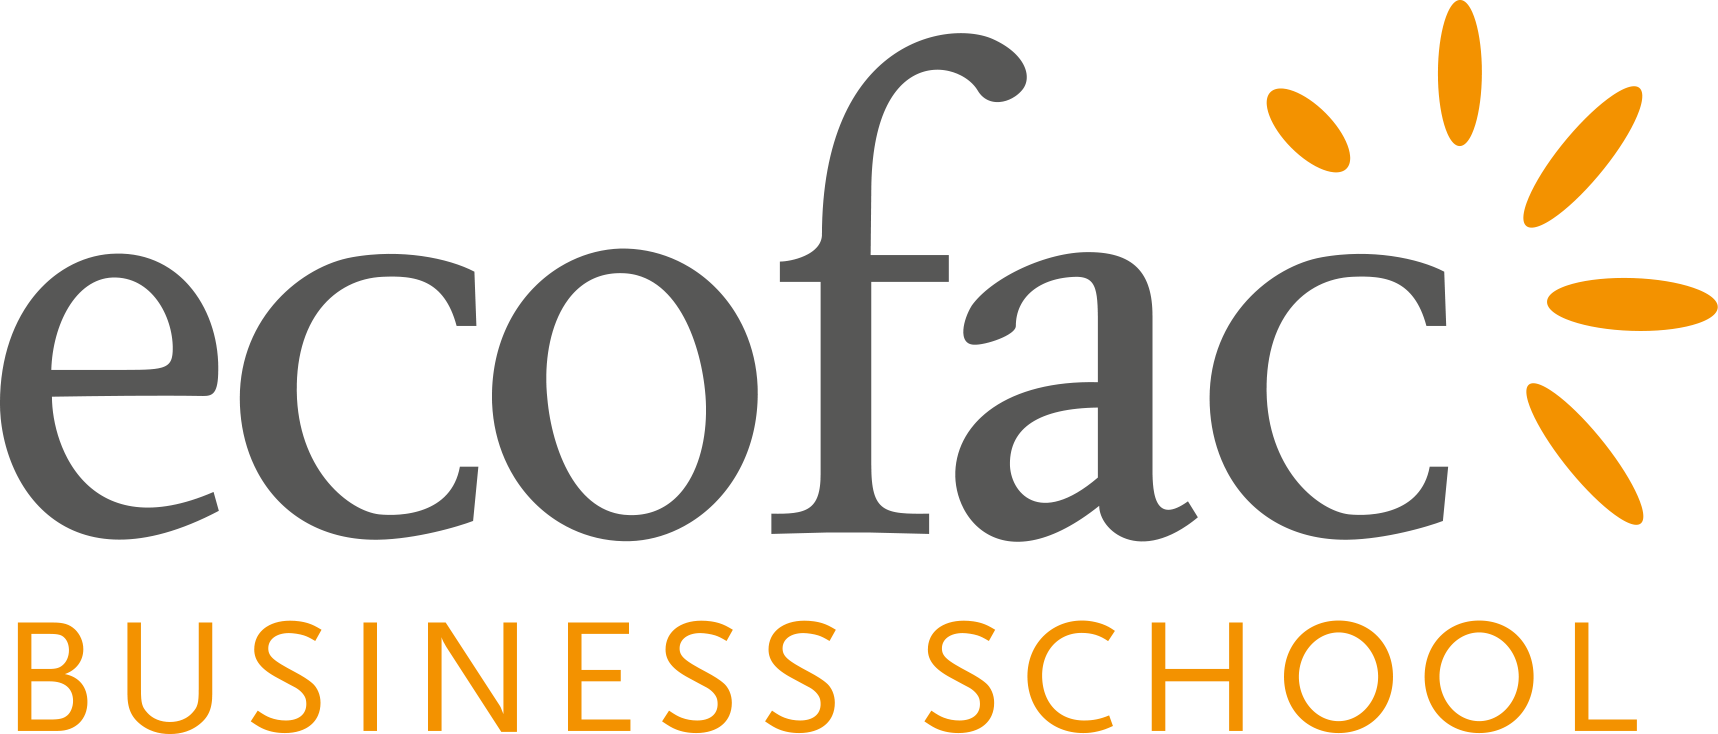 ECOFAC Business School 